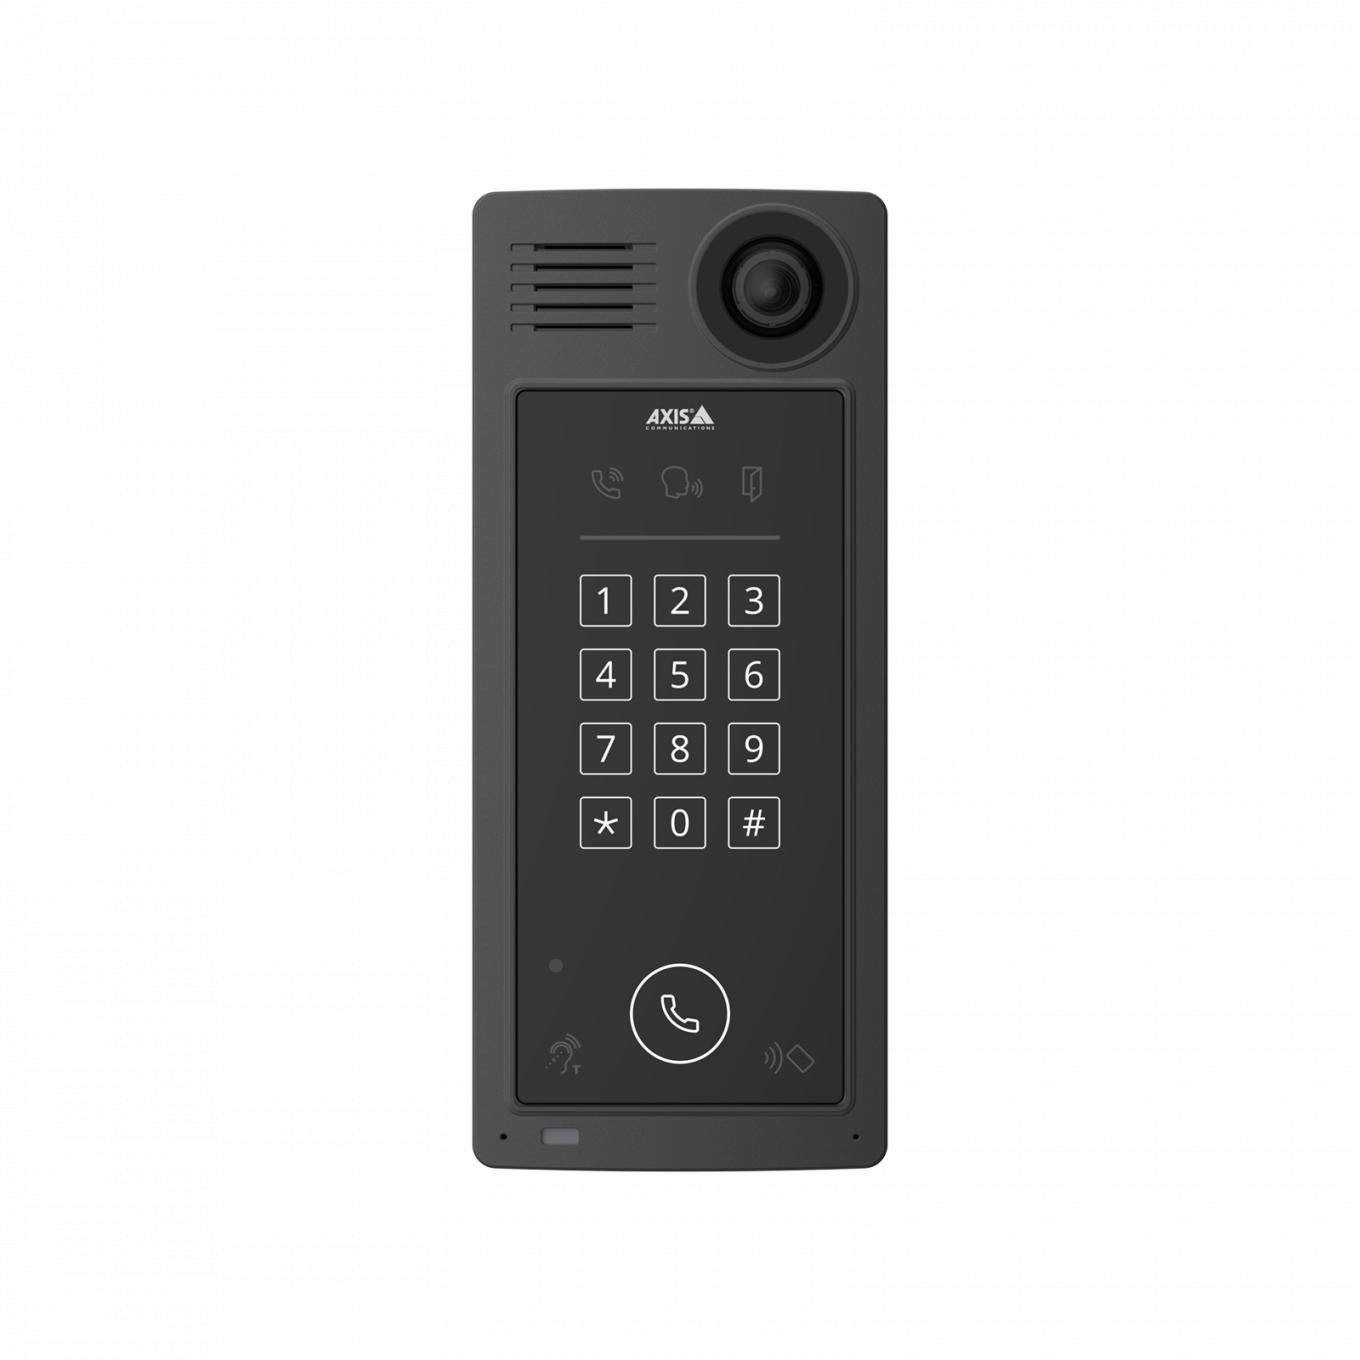 Сетевой видеодомофон AXIS A8207-VE MkII Network Video Door Station, вид спереди